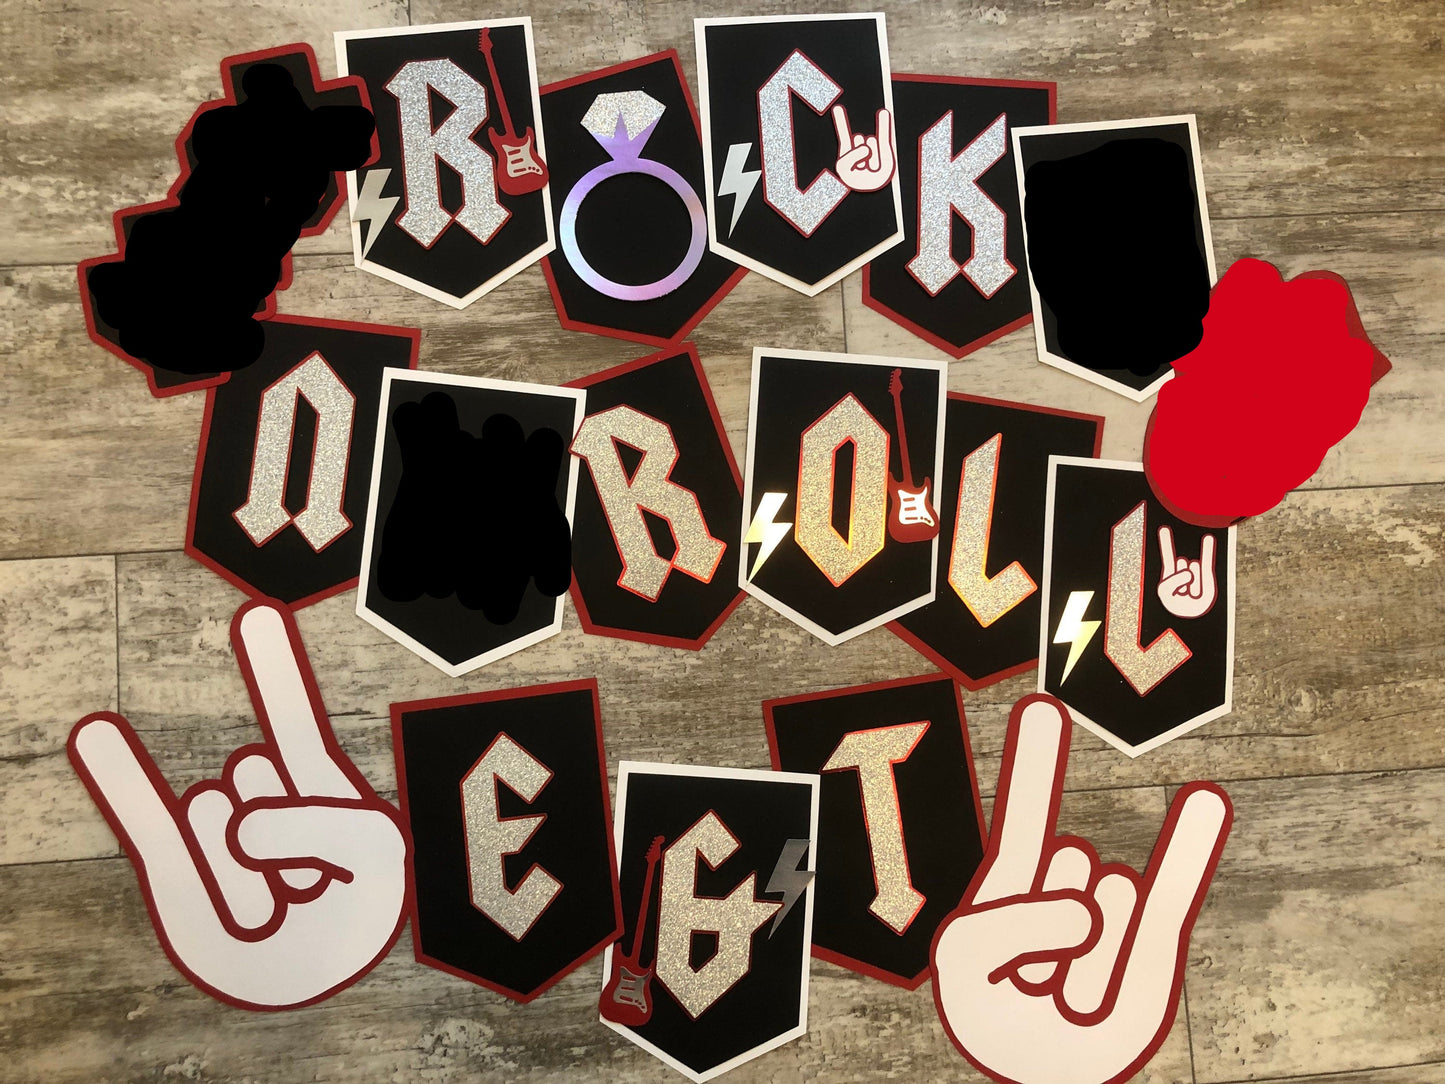 Rock N Roll Rockstar Born To Rock Theme Party Birthday Banner